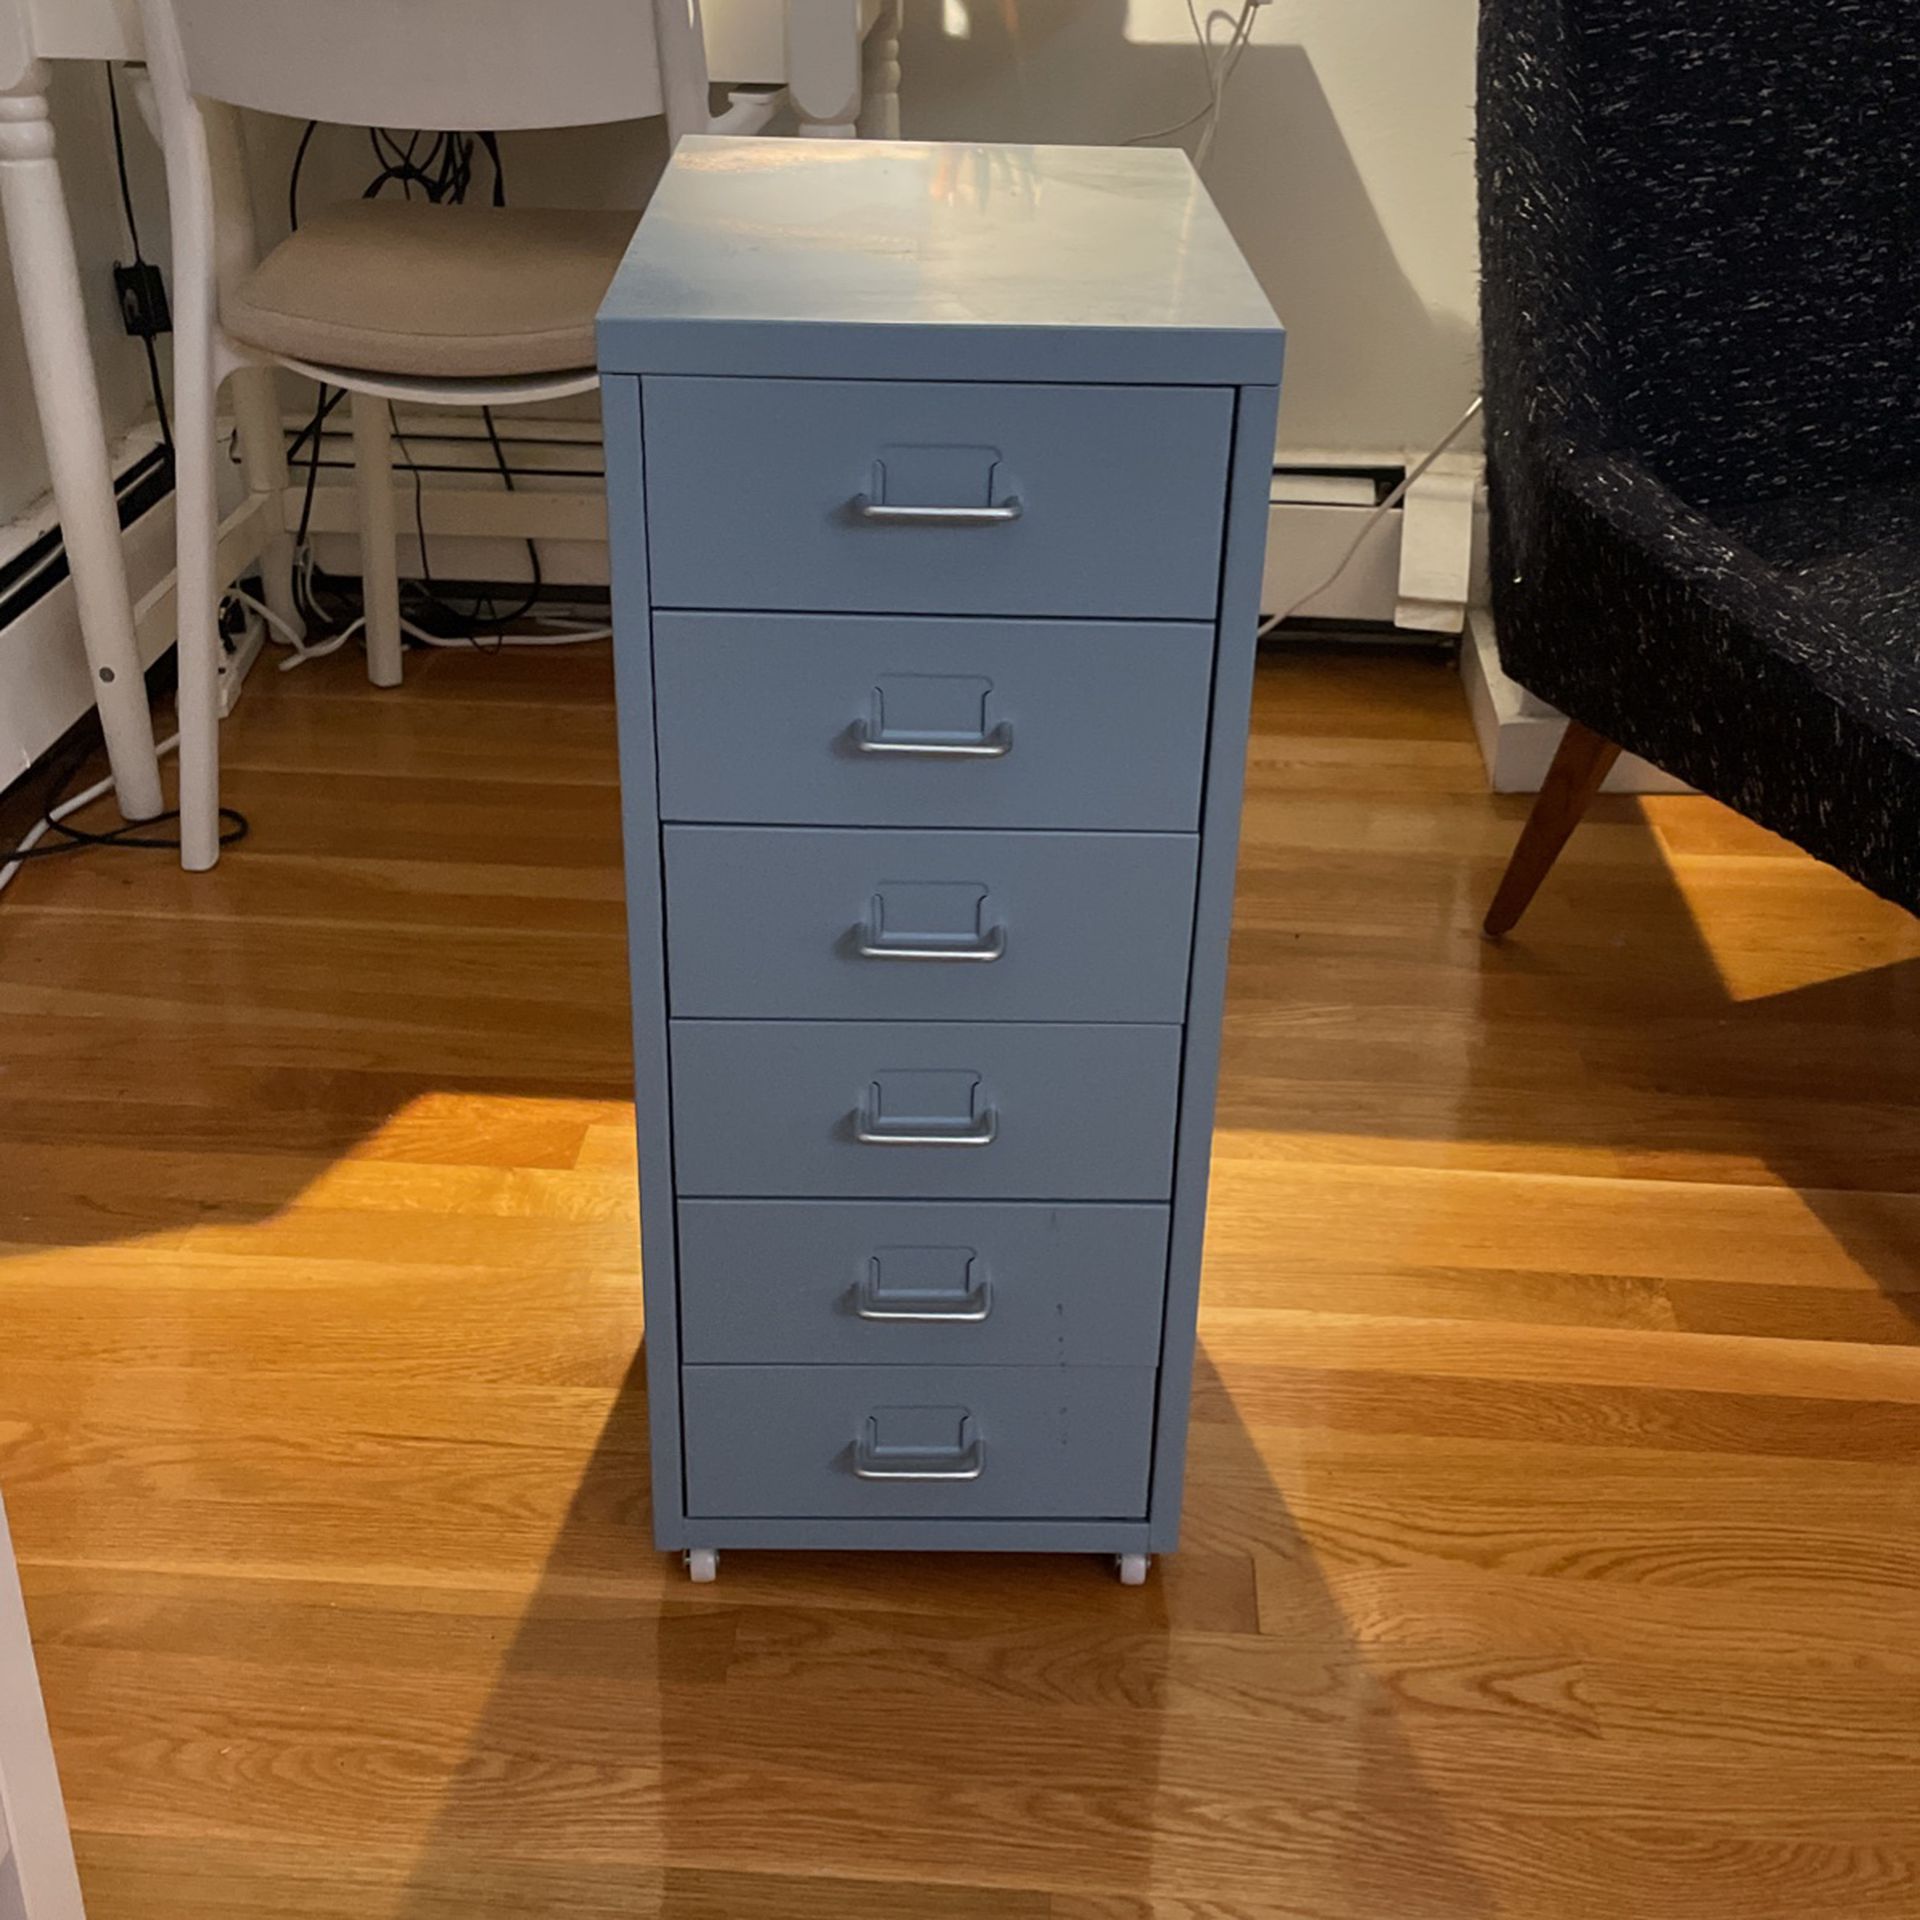 IKEA Filing Cabinet (6 drawers)